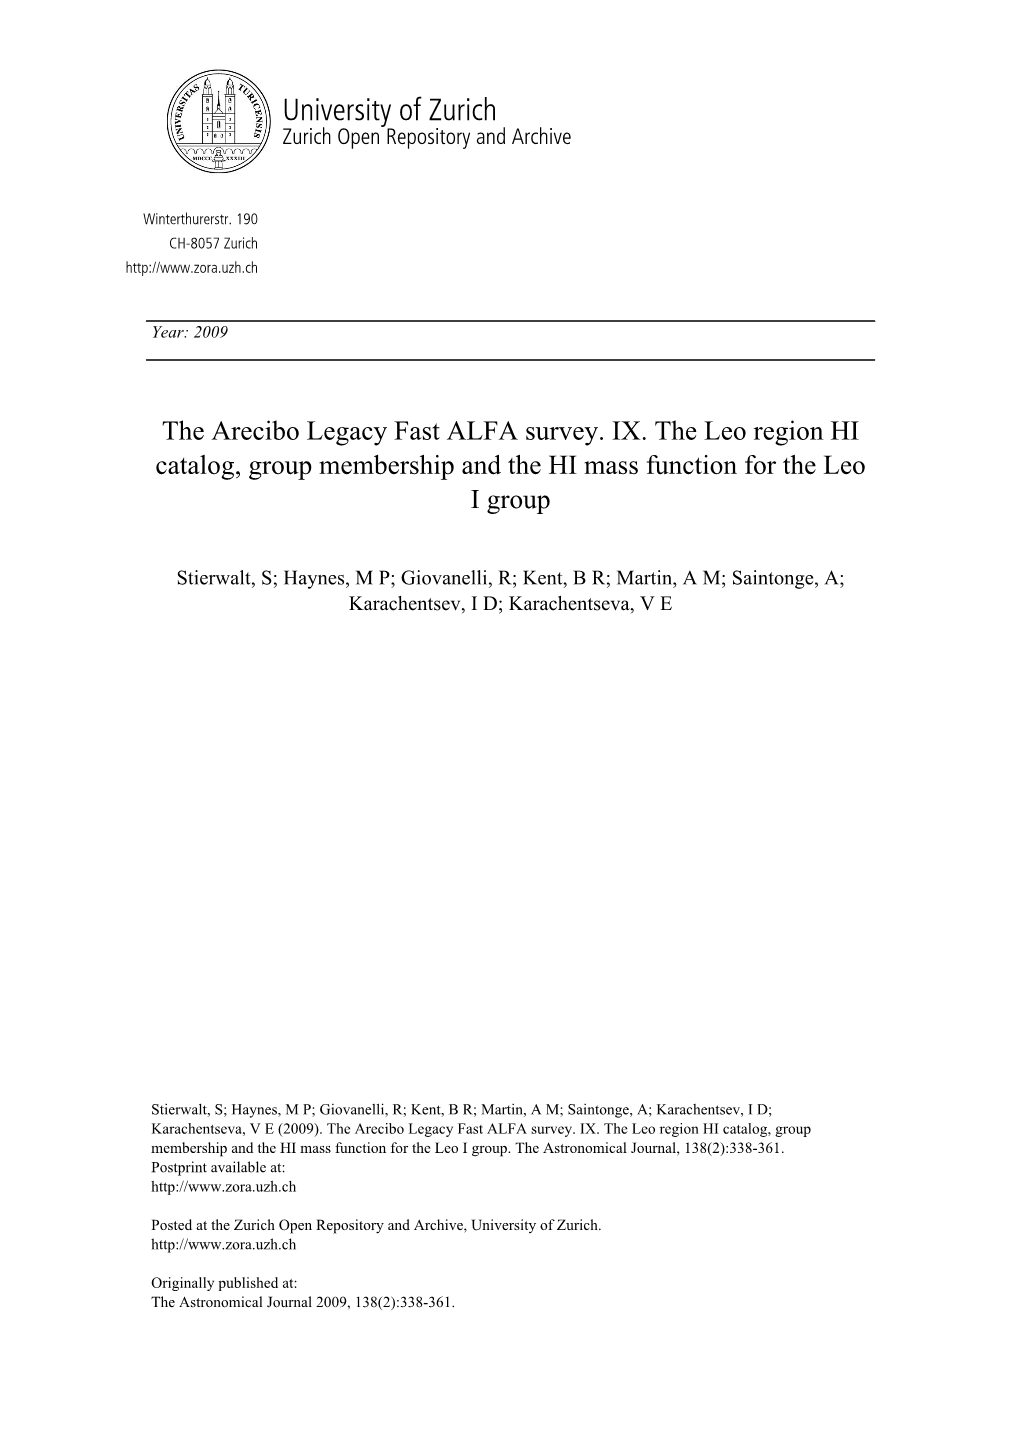 The Arecibo Legacy Fast ALFA Survey. IX. the Leo Region HI Catalog, Group Membership and the HI Mass Function for the Leo I Group